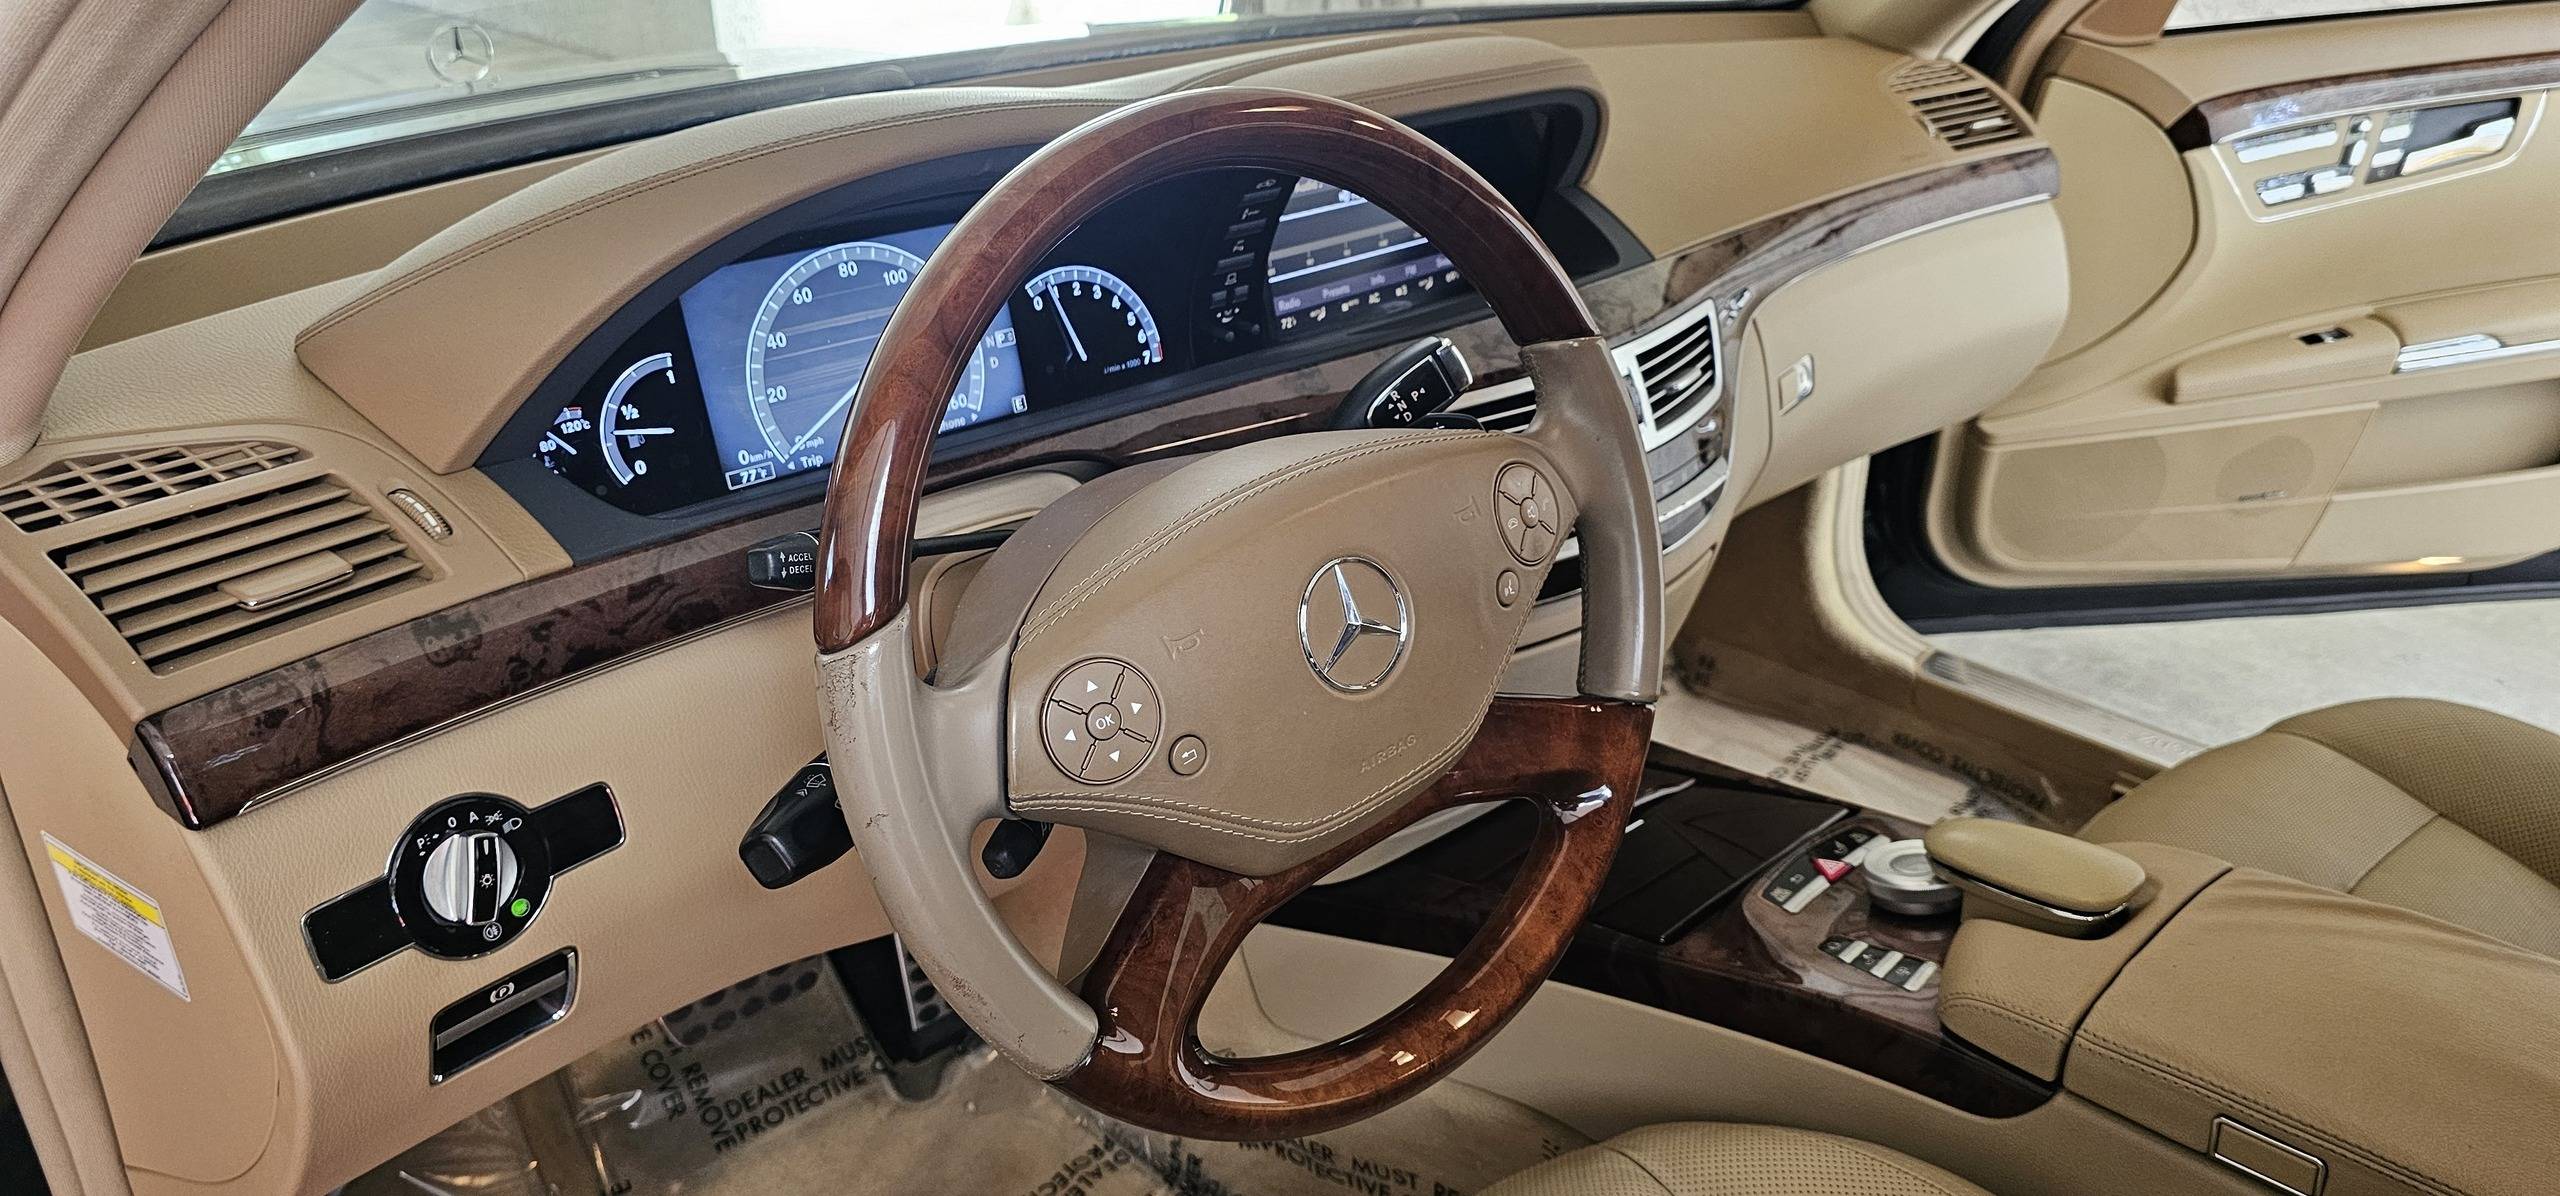 2011 Mercedes_Benz Sedan 31